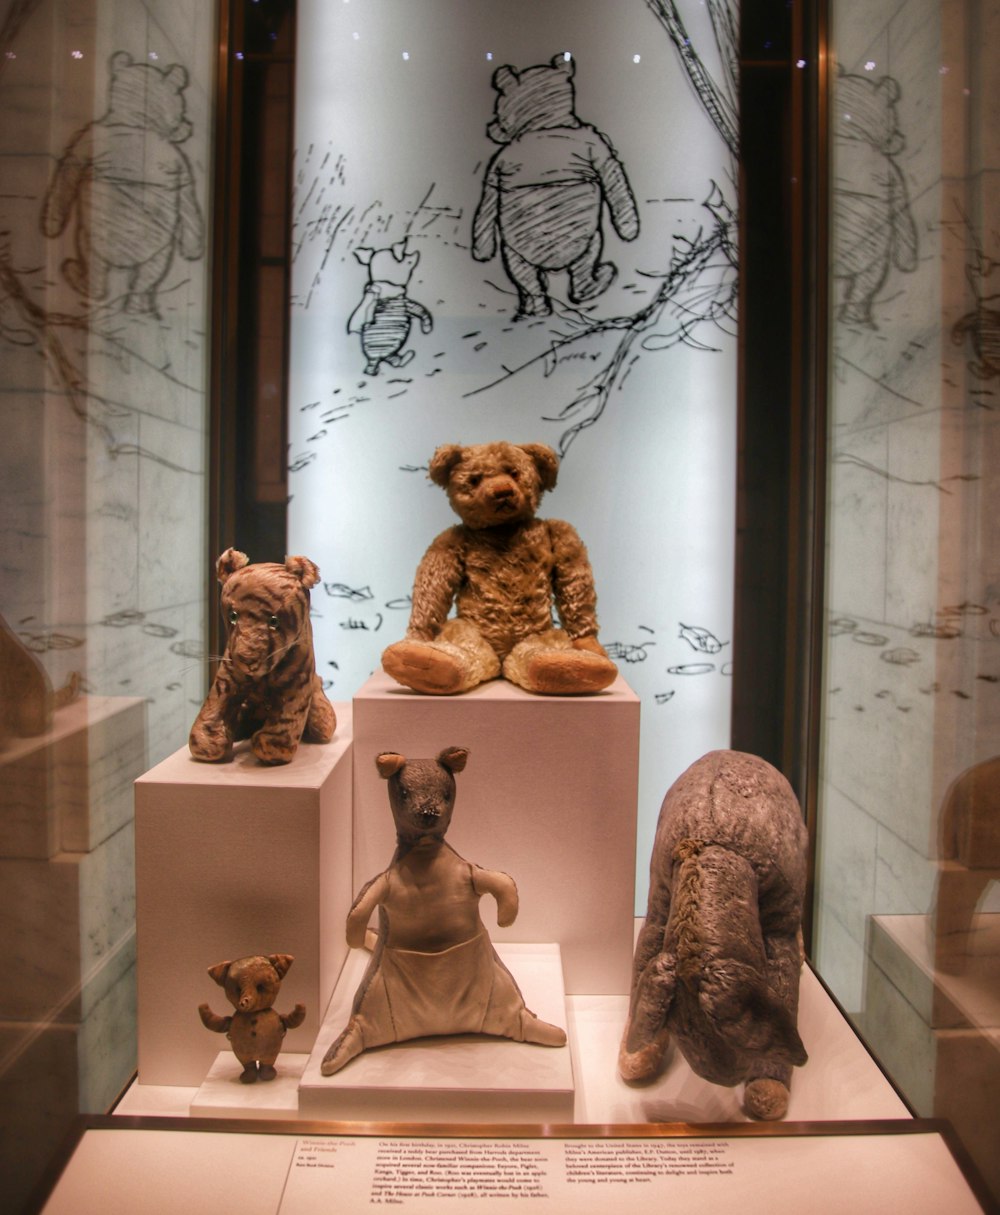 a teddy bear sits on a display